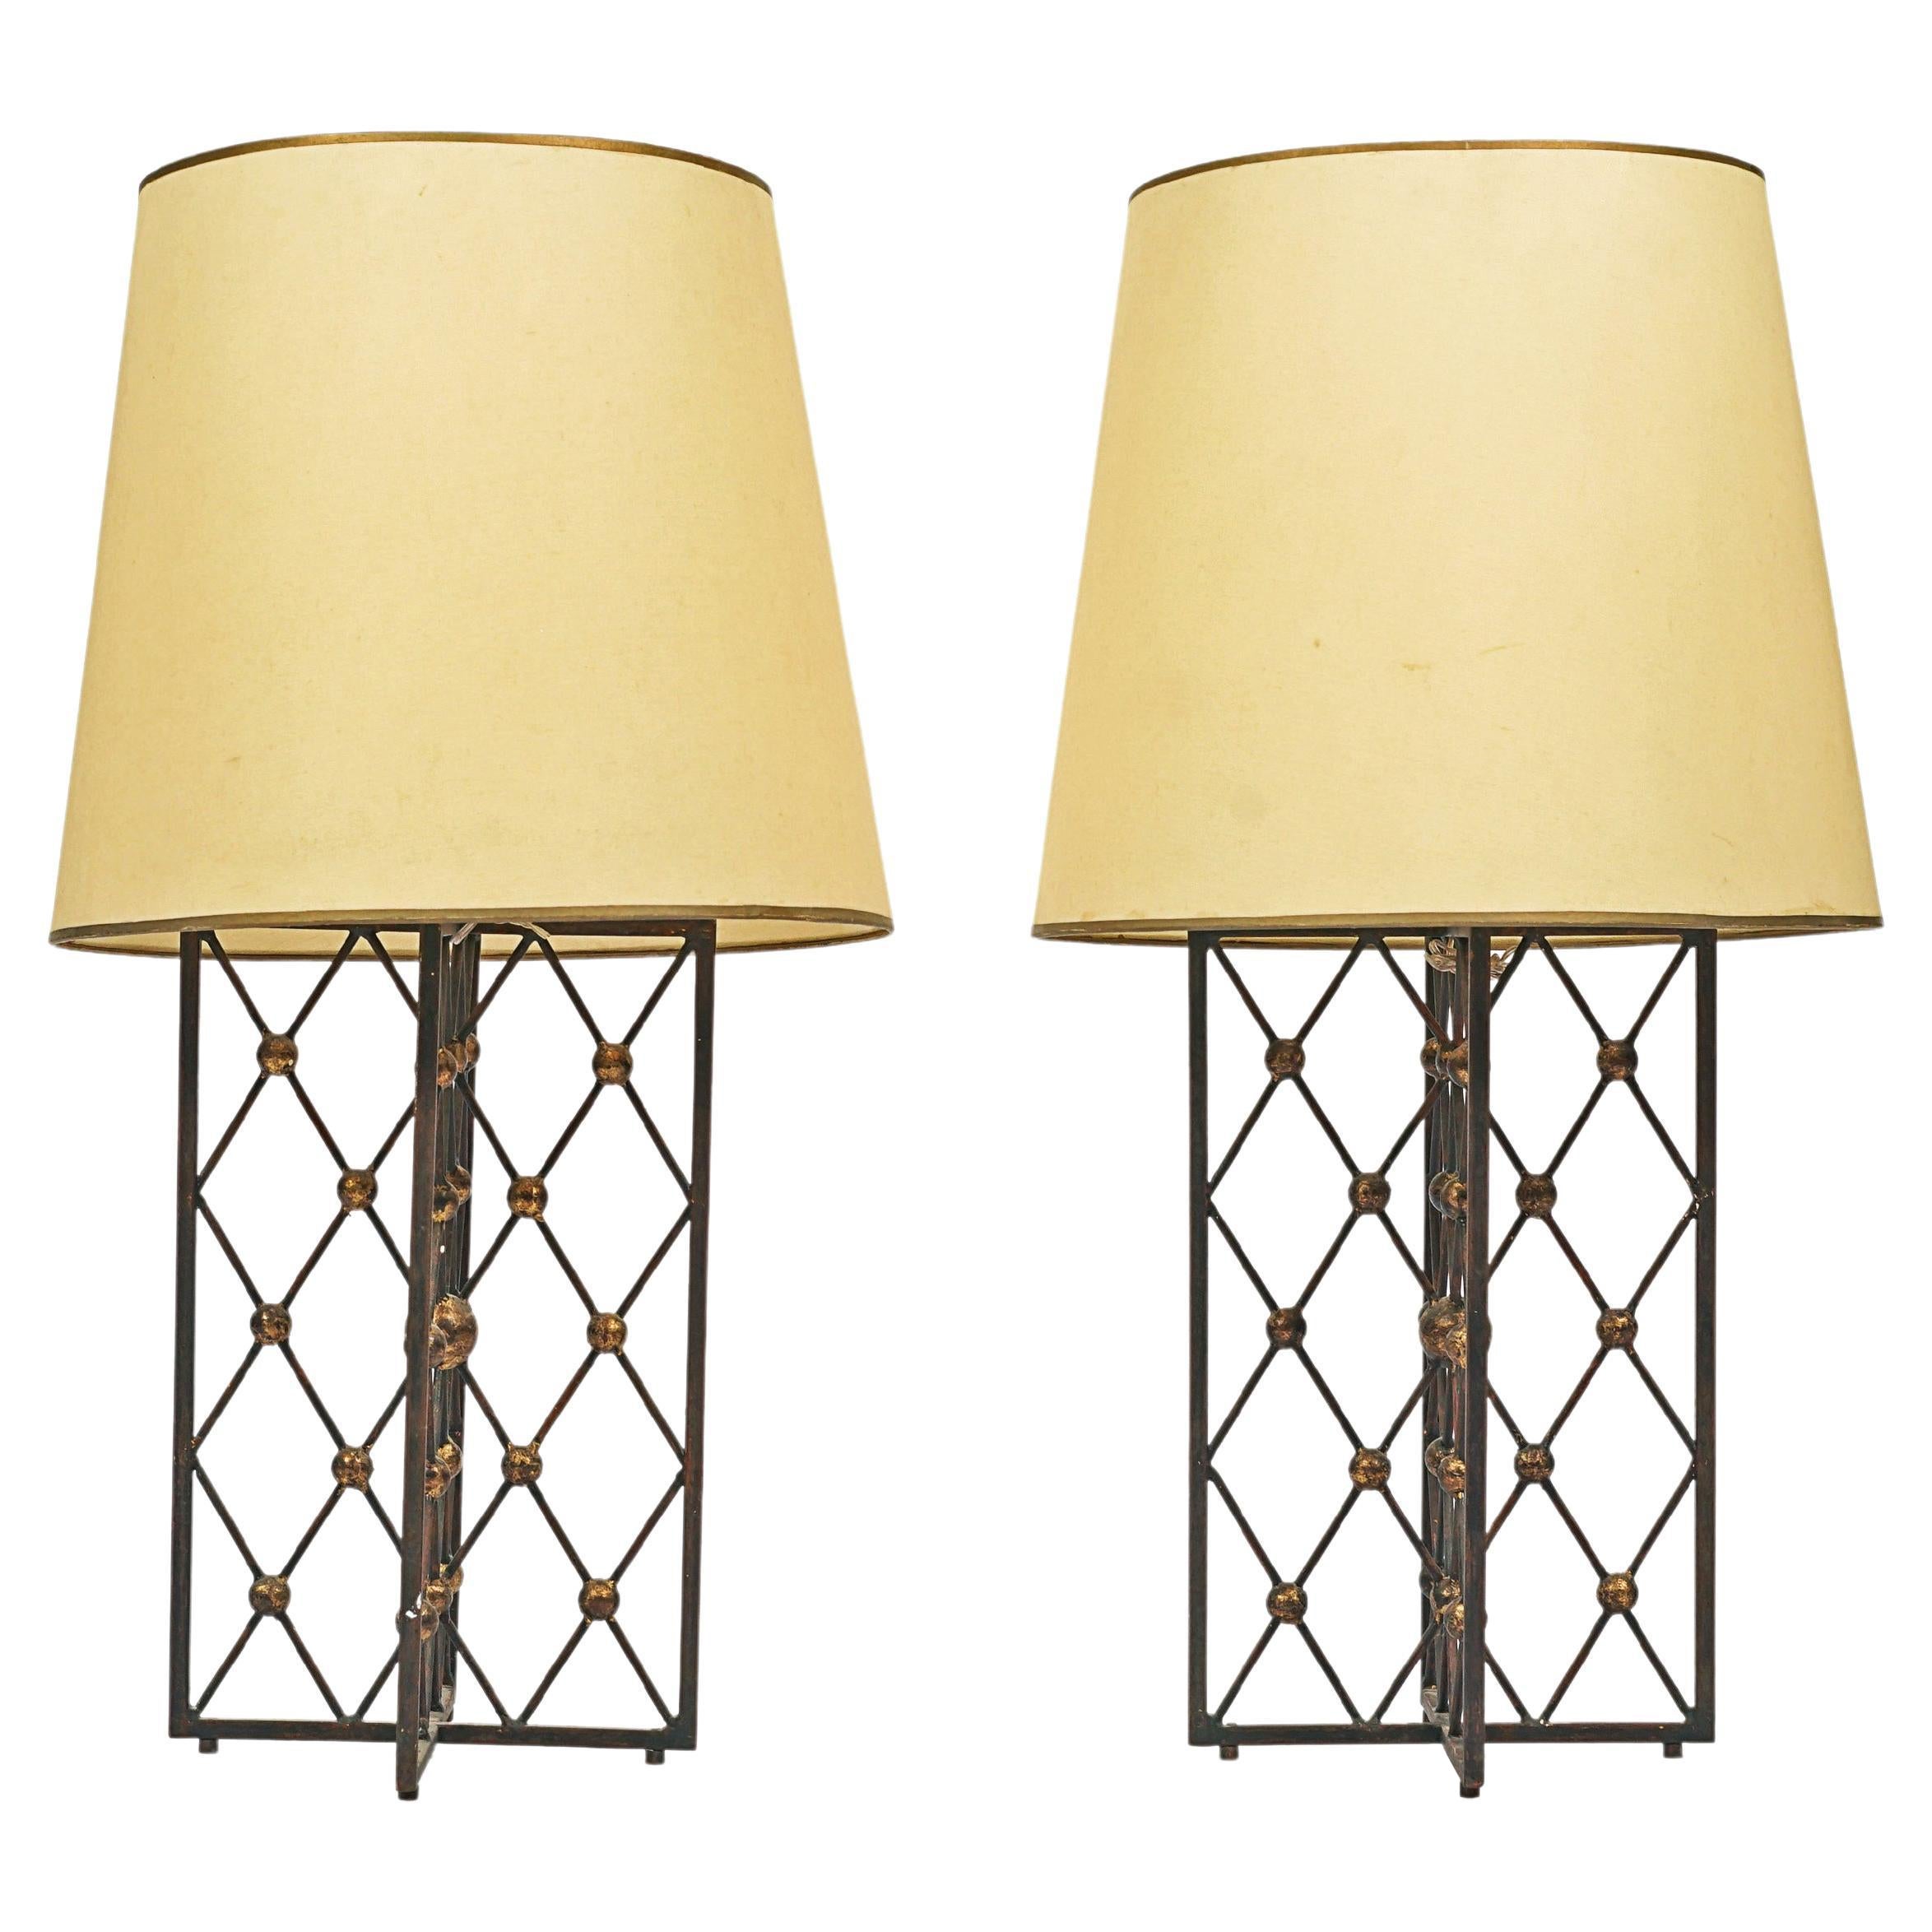 Pair of "Tour Eiffel" Table Lamps